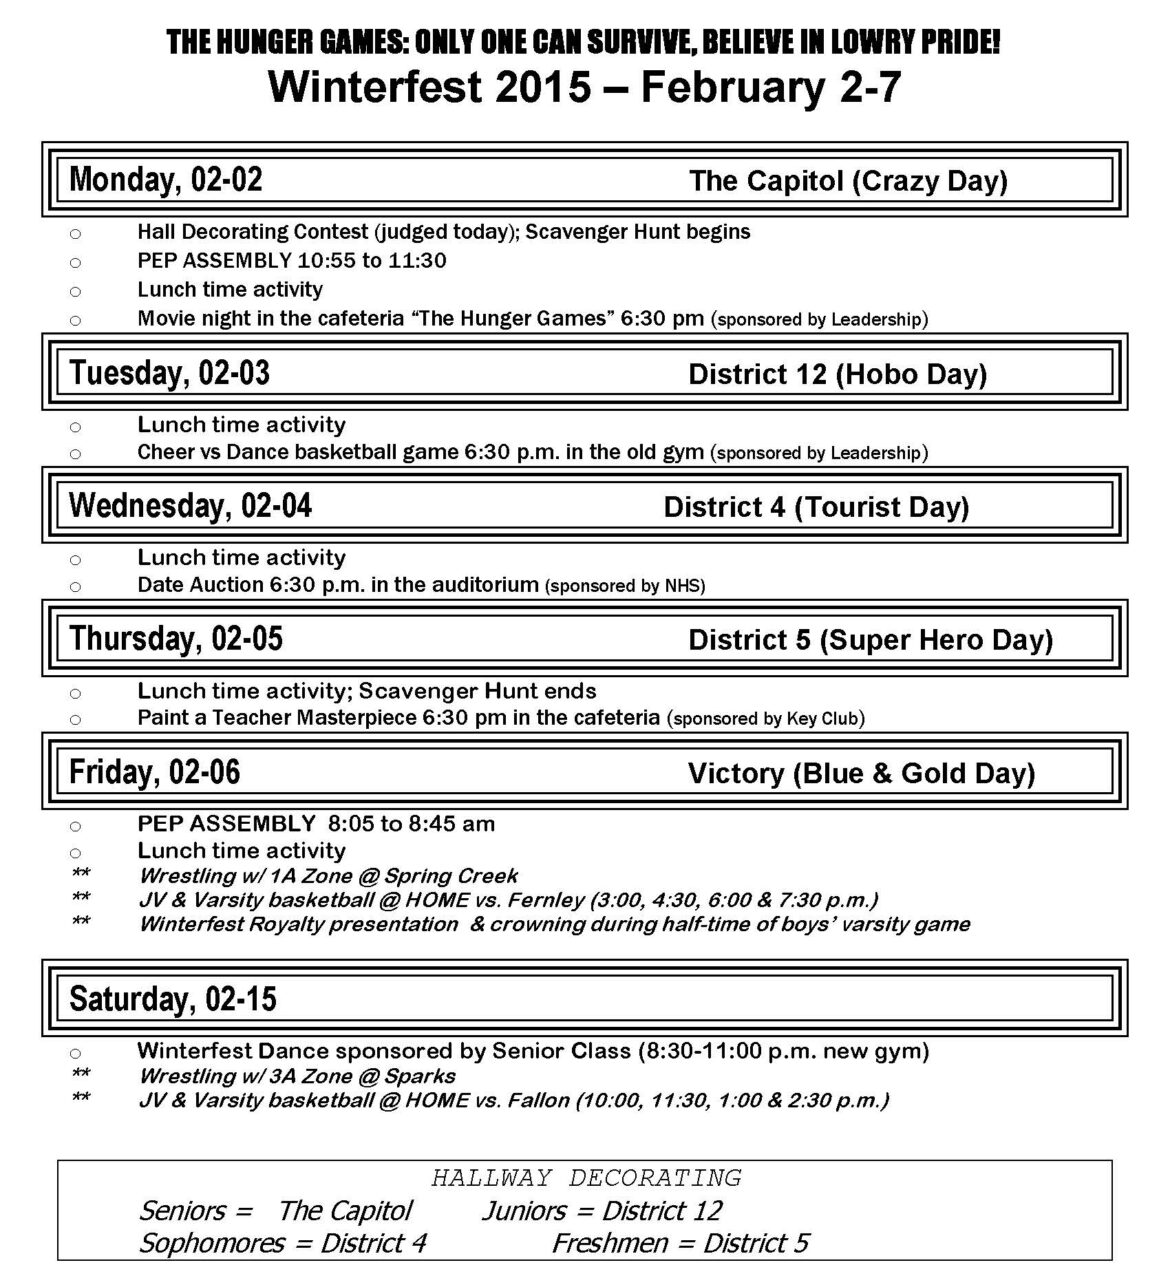 Winterfest week comes to Lowry